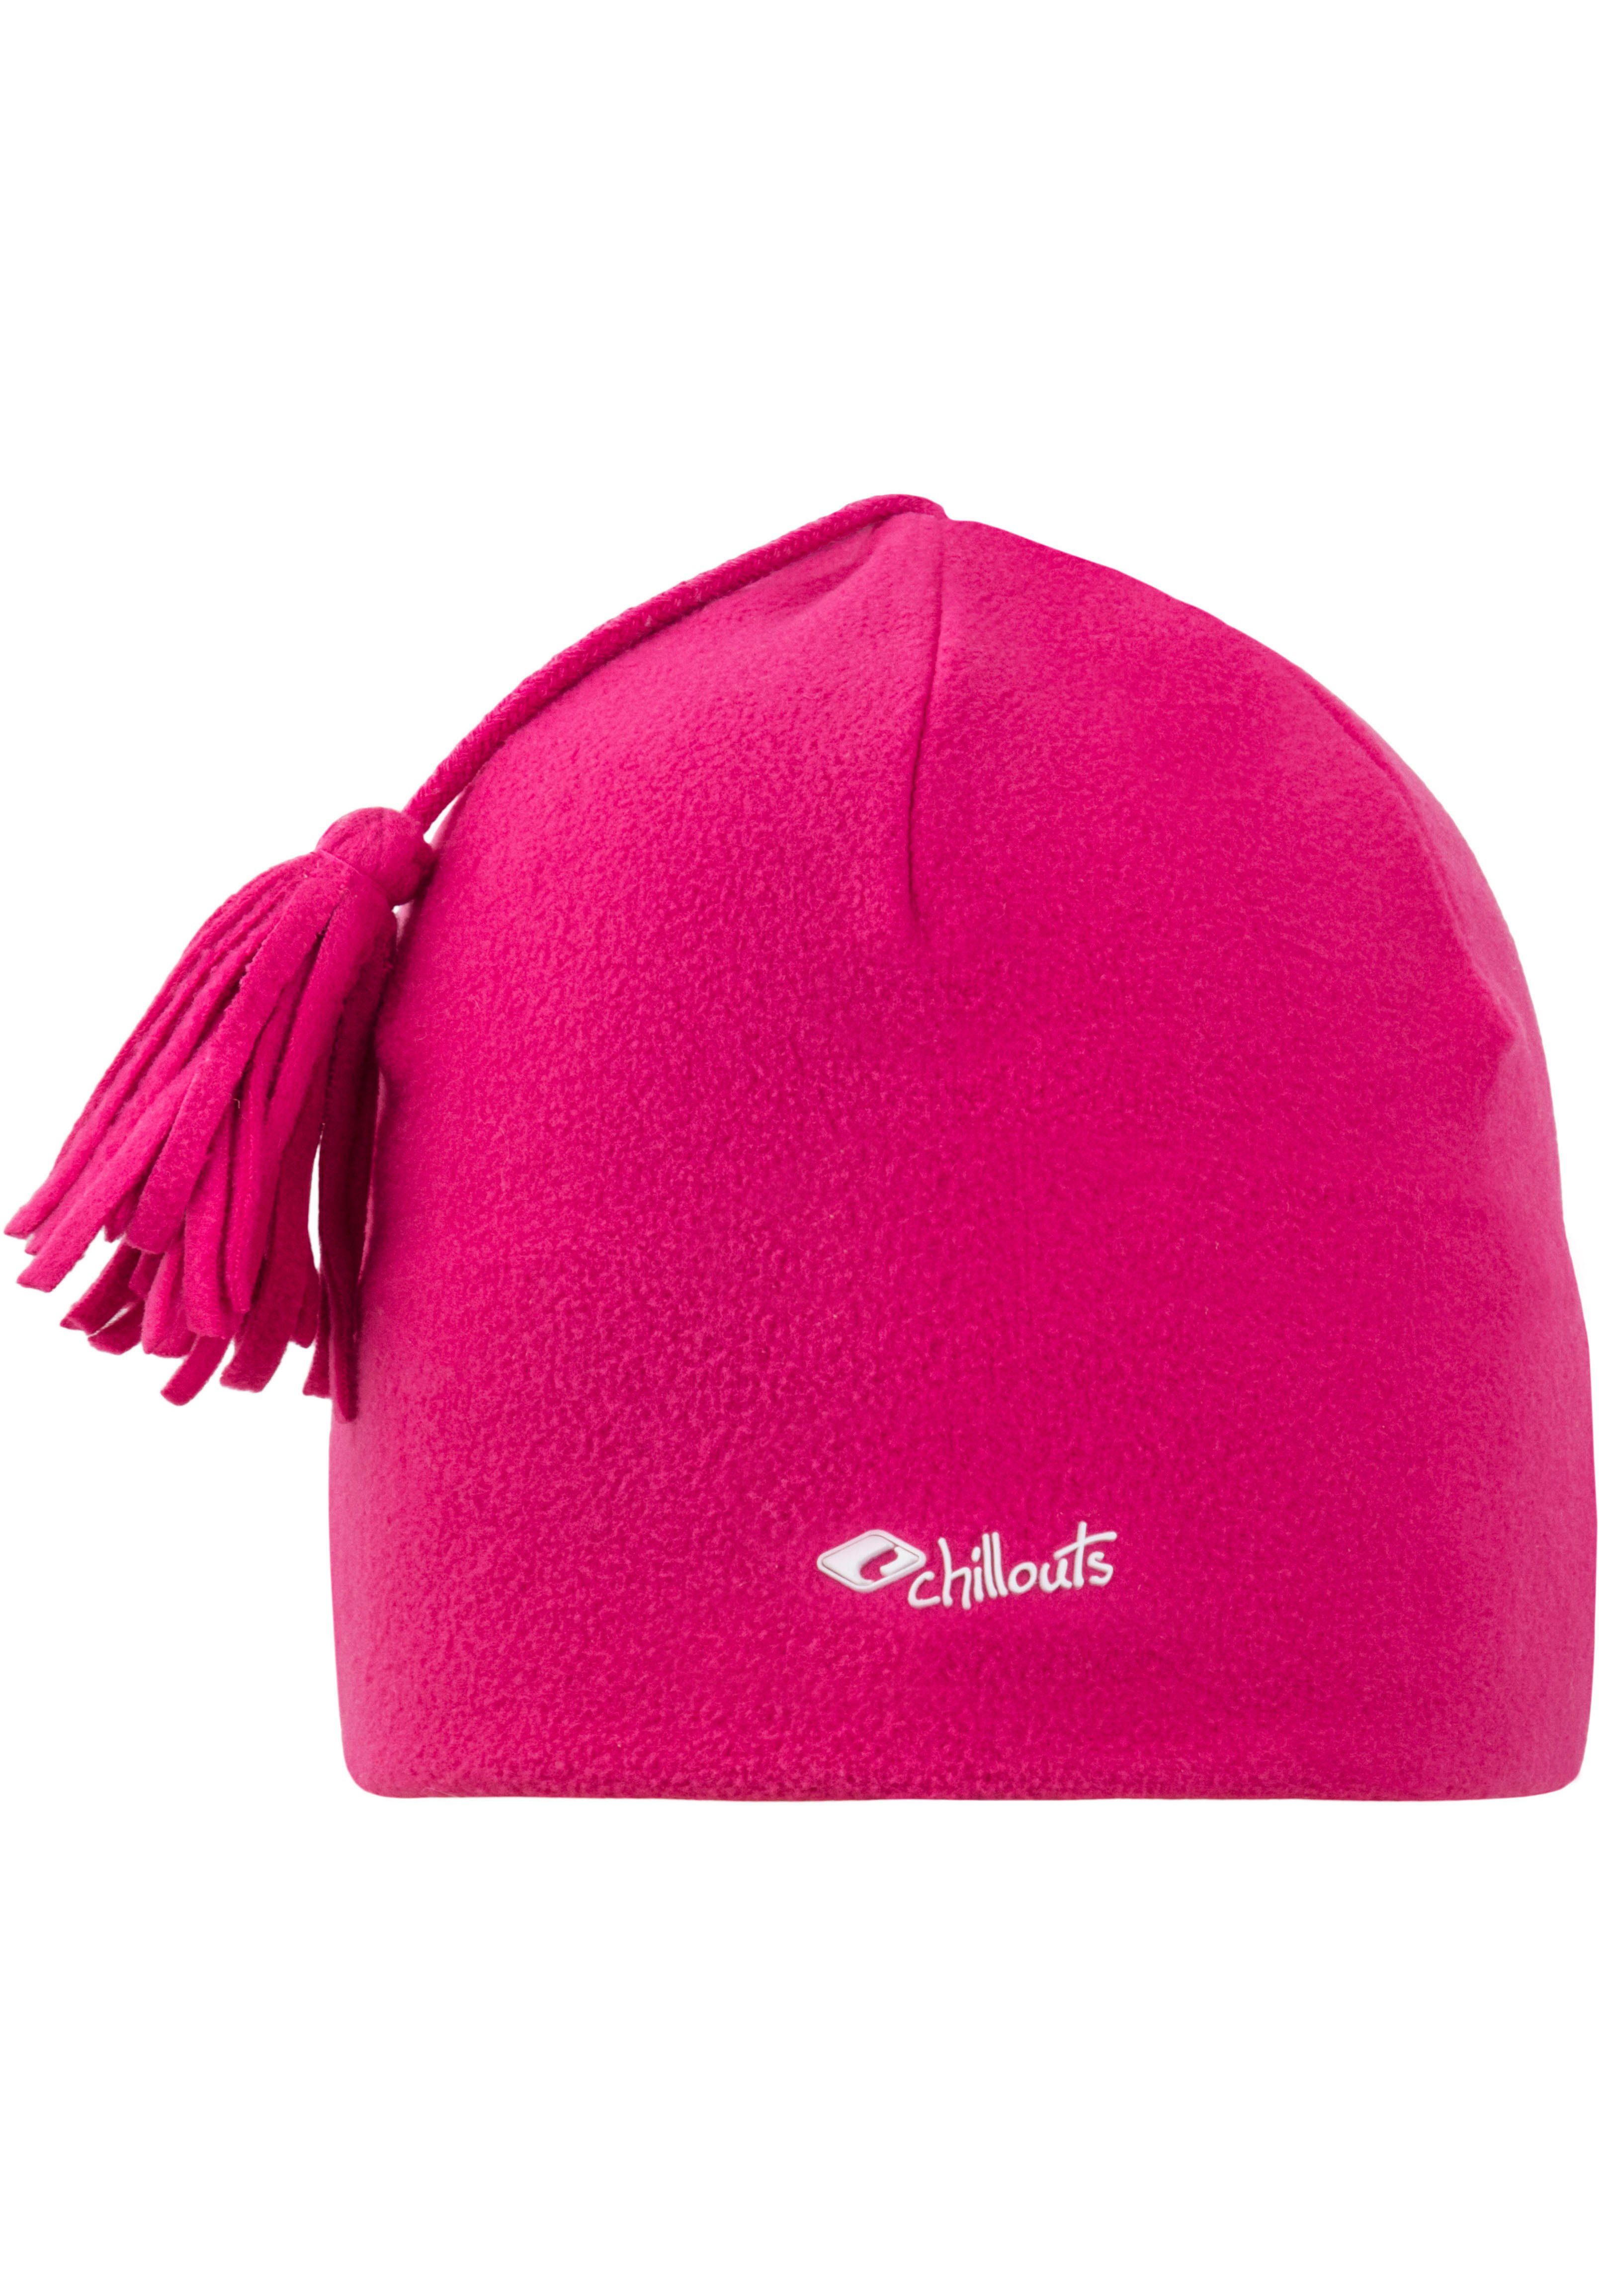 chillouts Fleecemütze Freeze Fleece Pom Hat pink